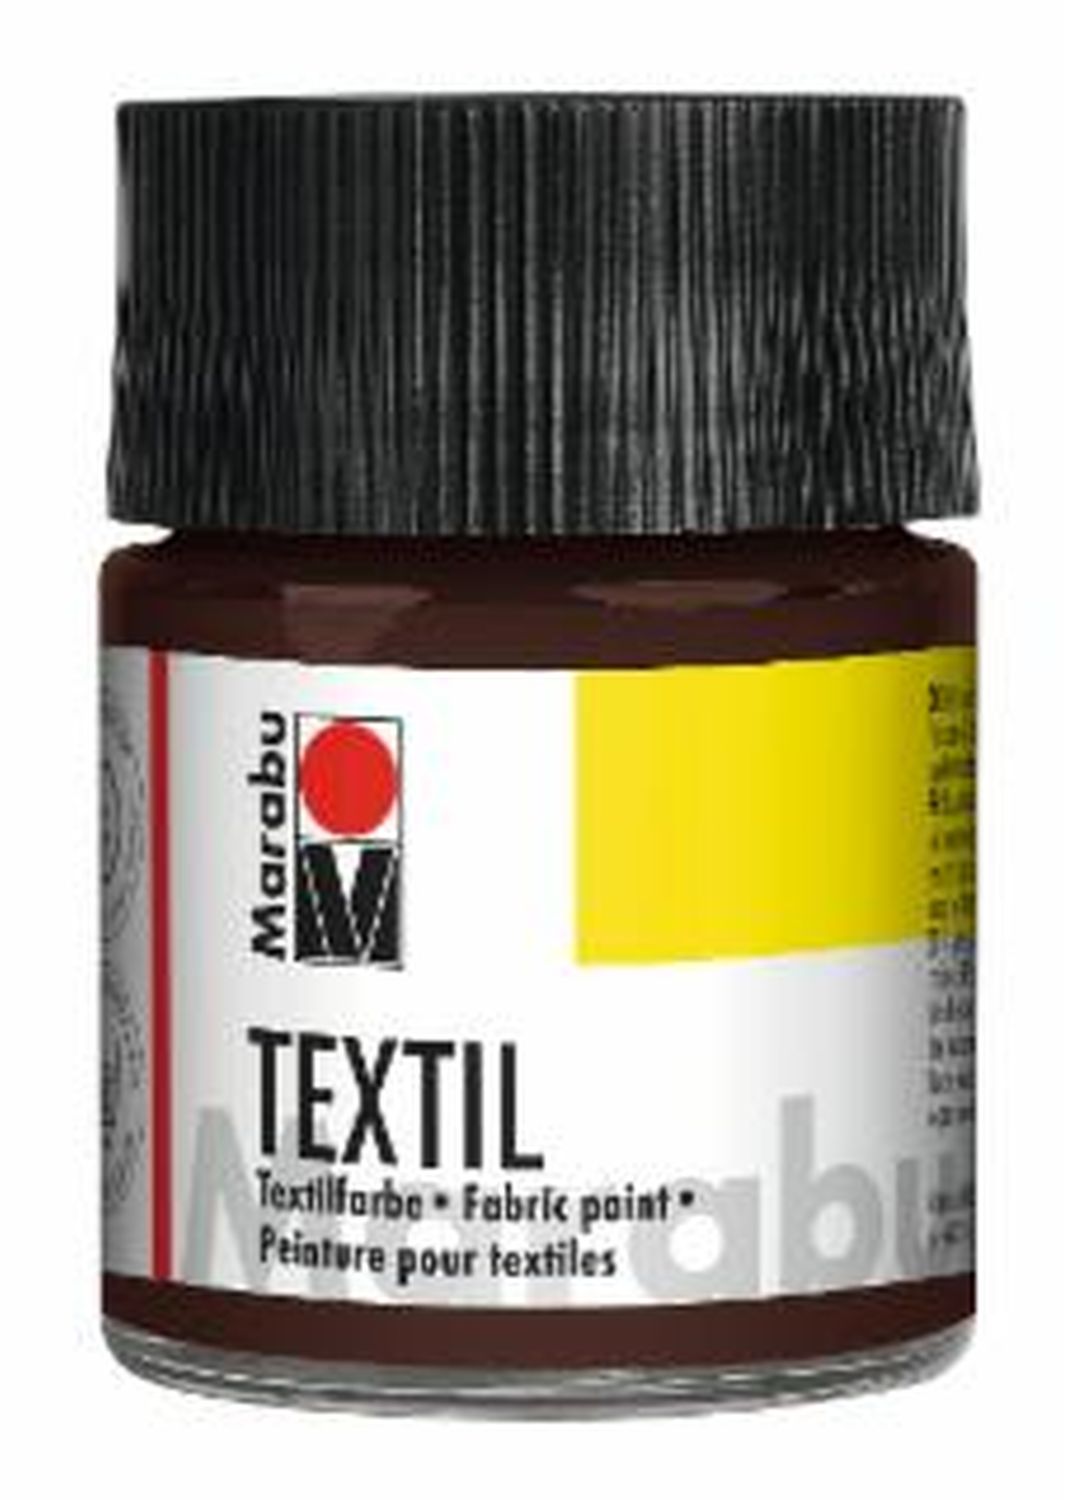 Textil - Dunkelbraun 045, 50 ml